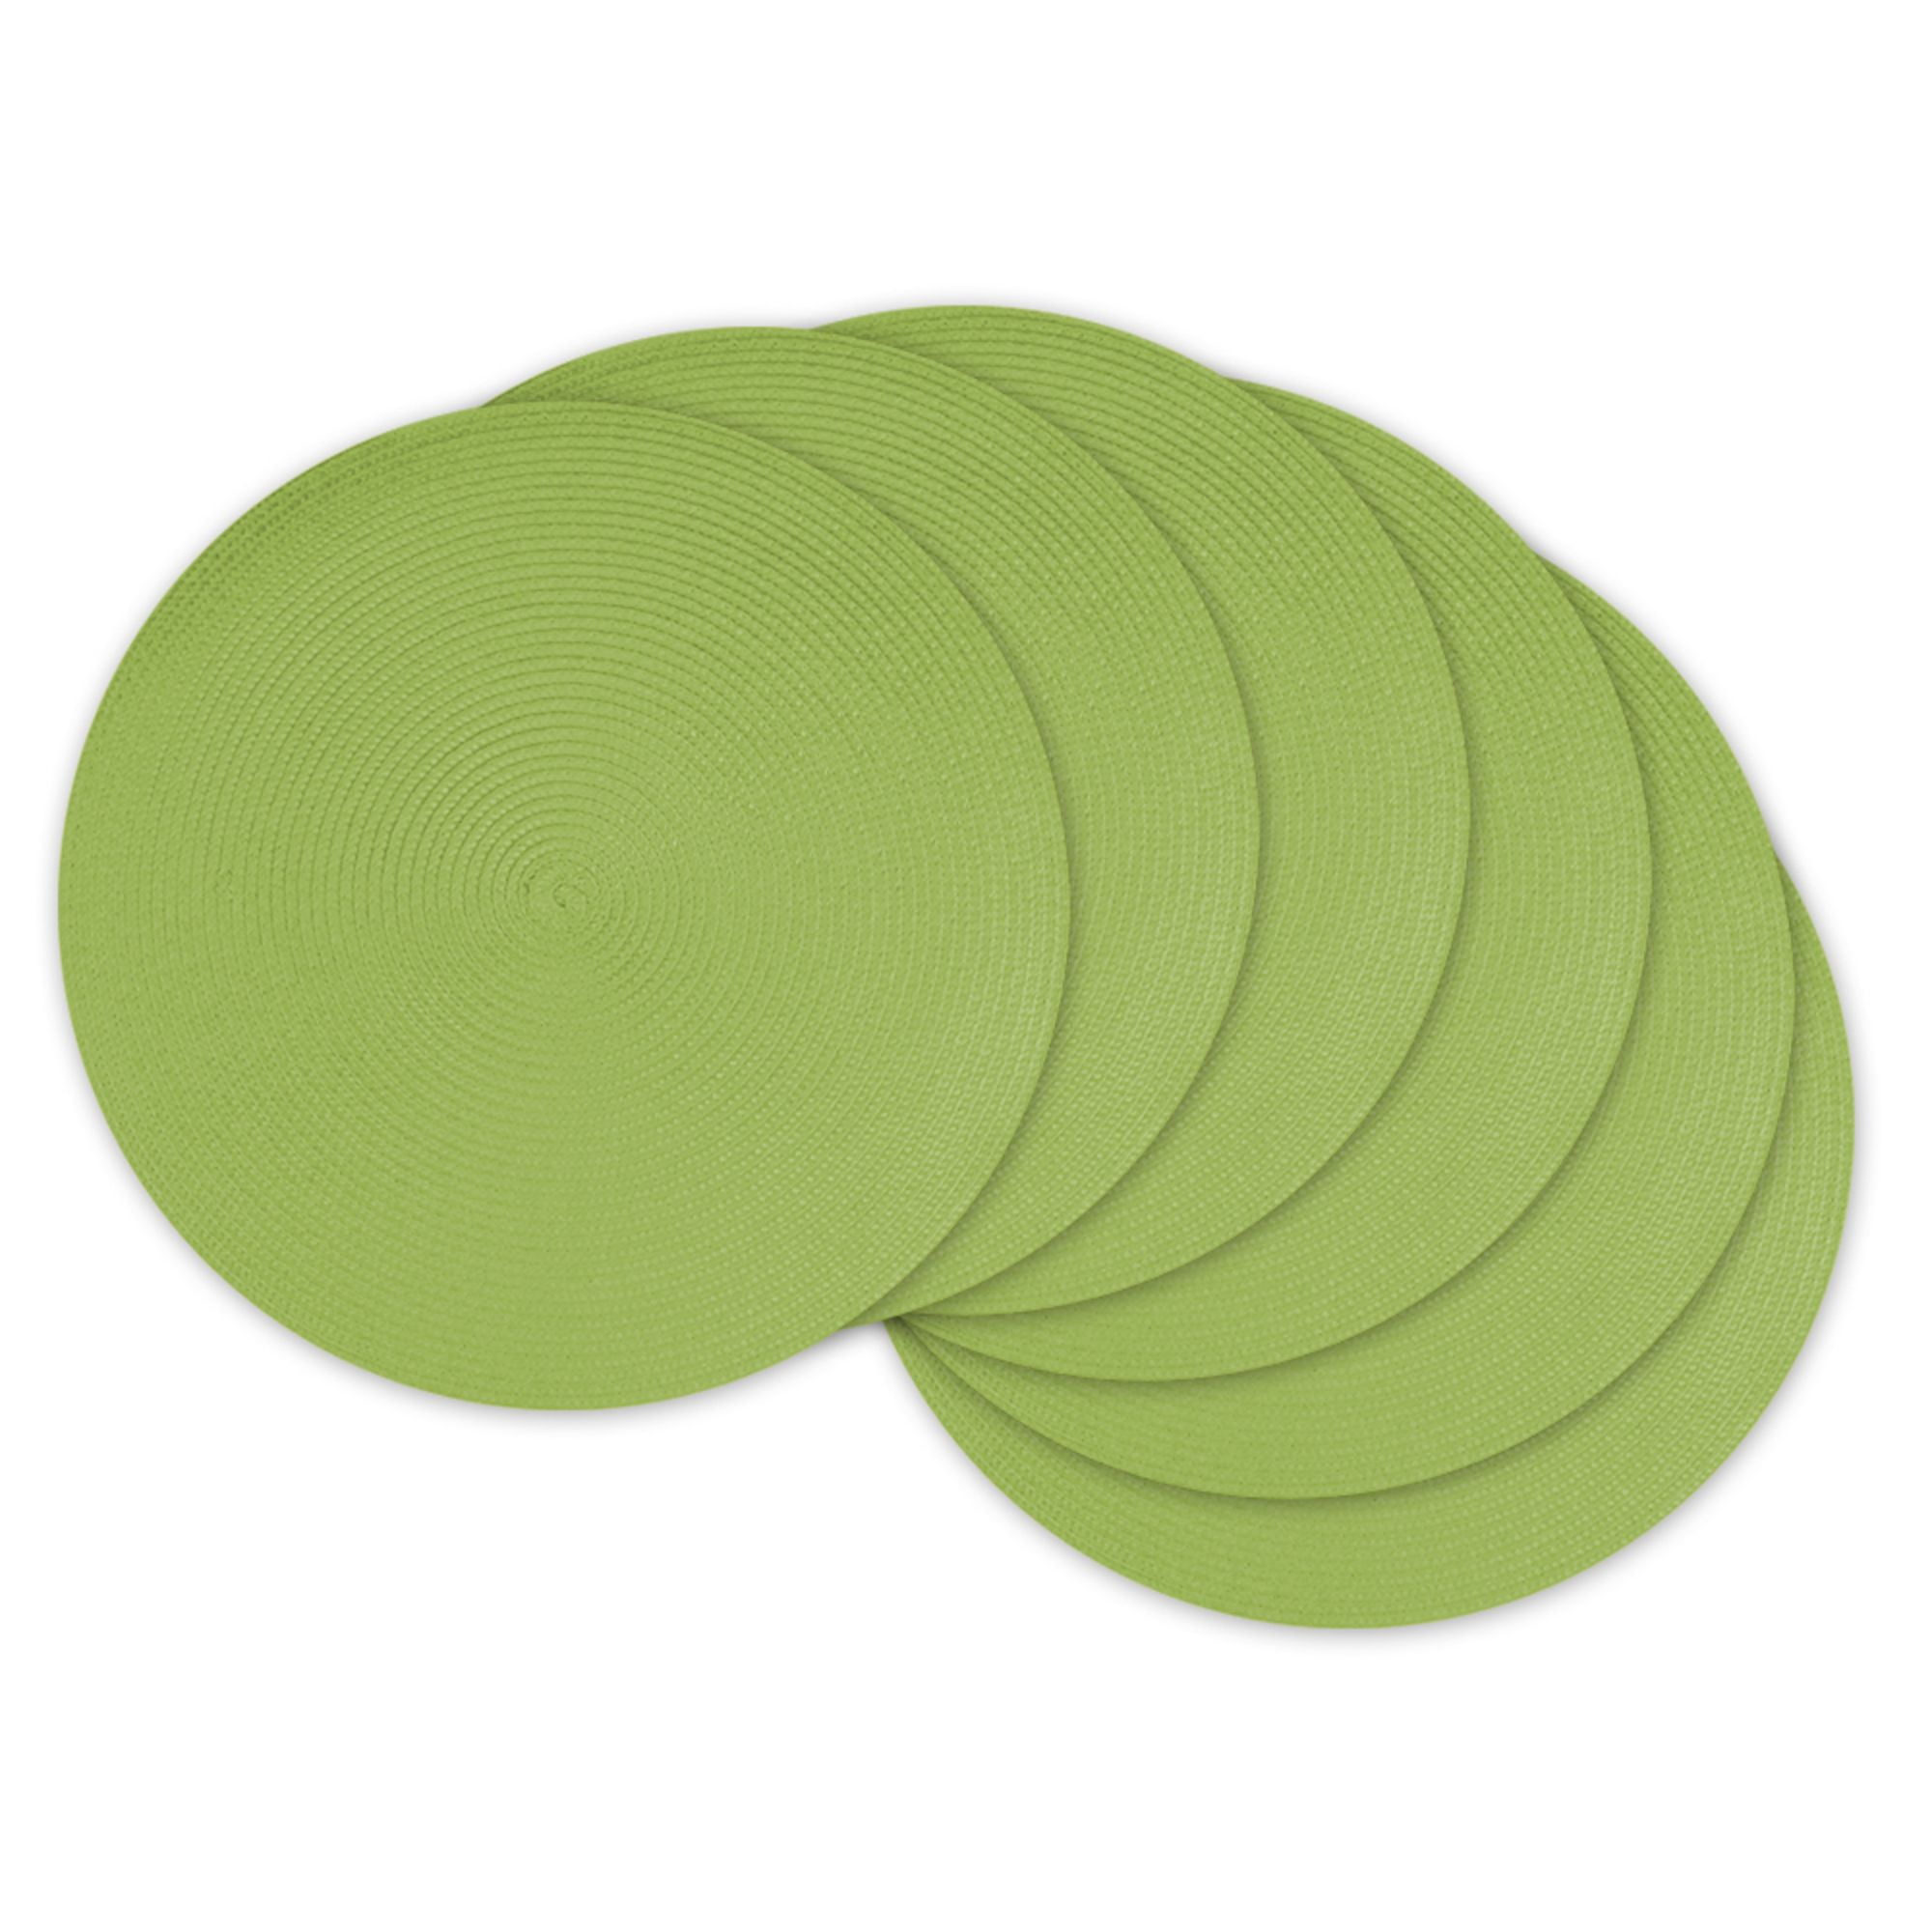 15"x15" Round Placemat Green Threshold